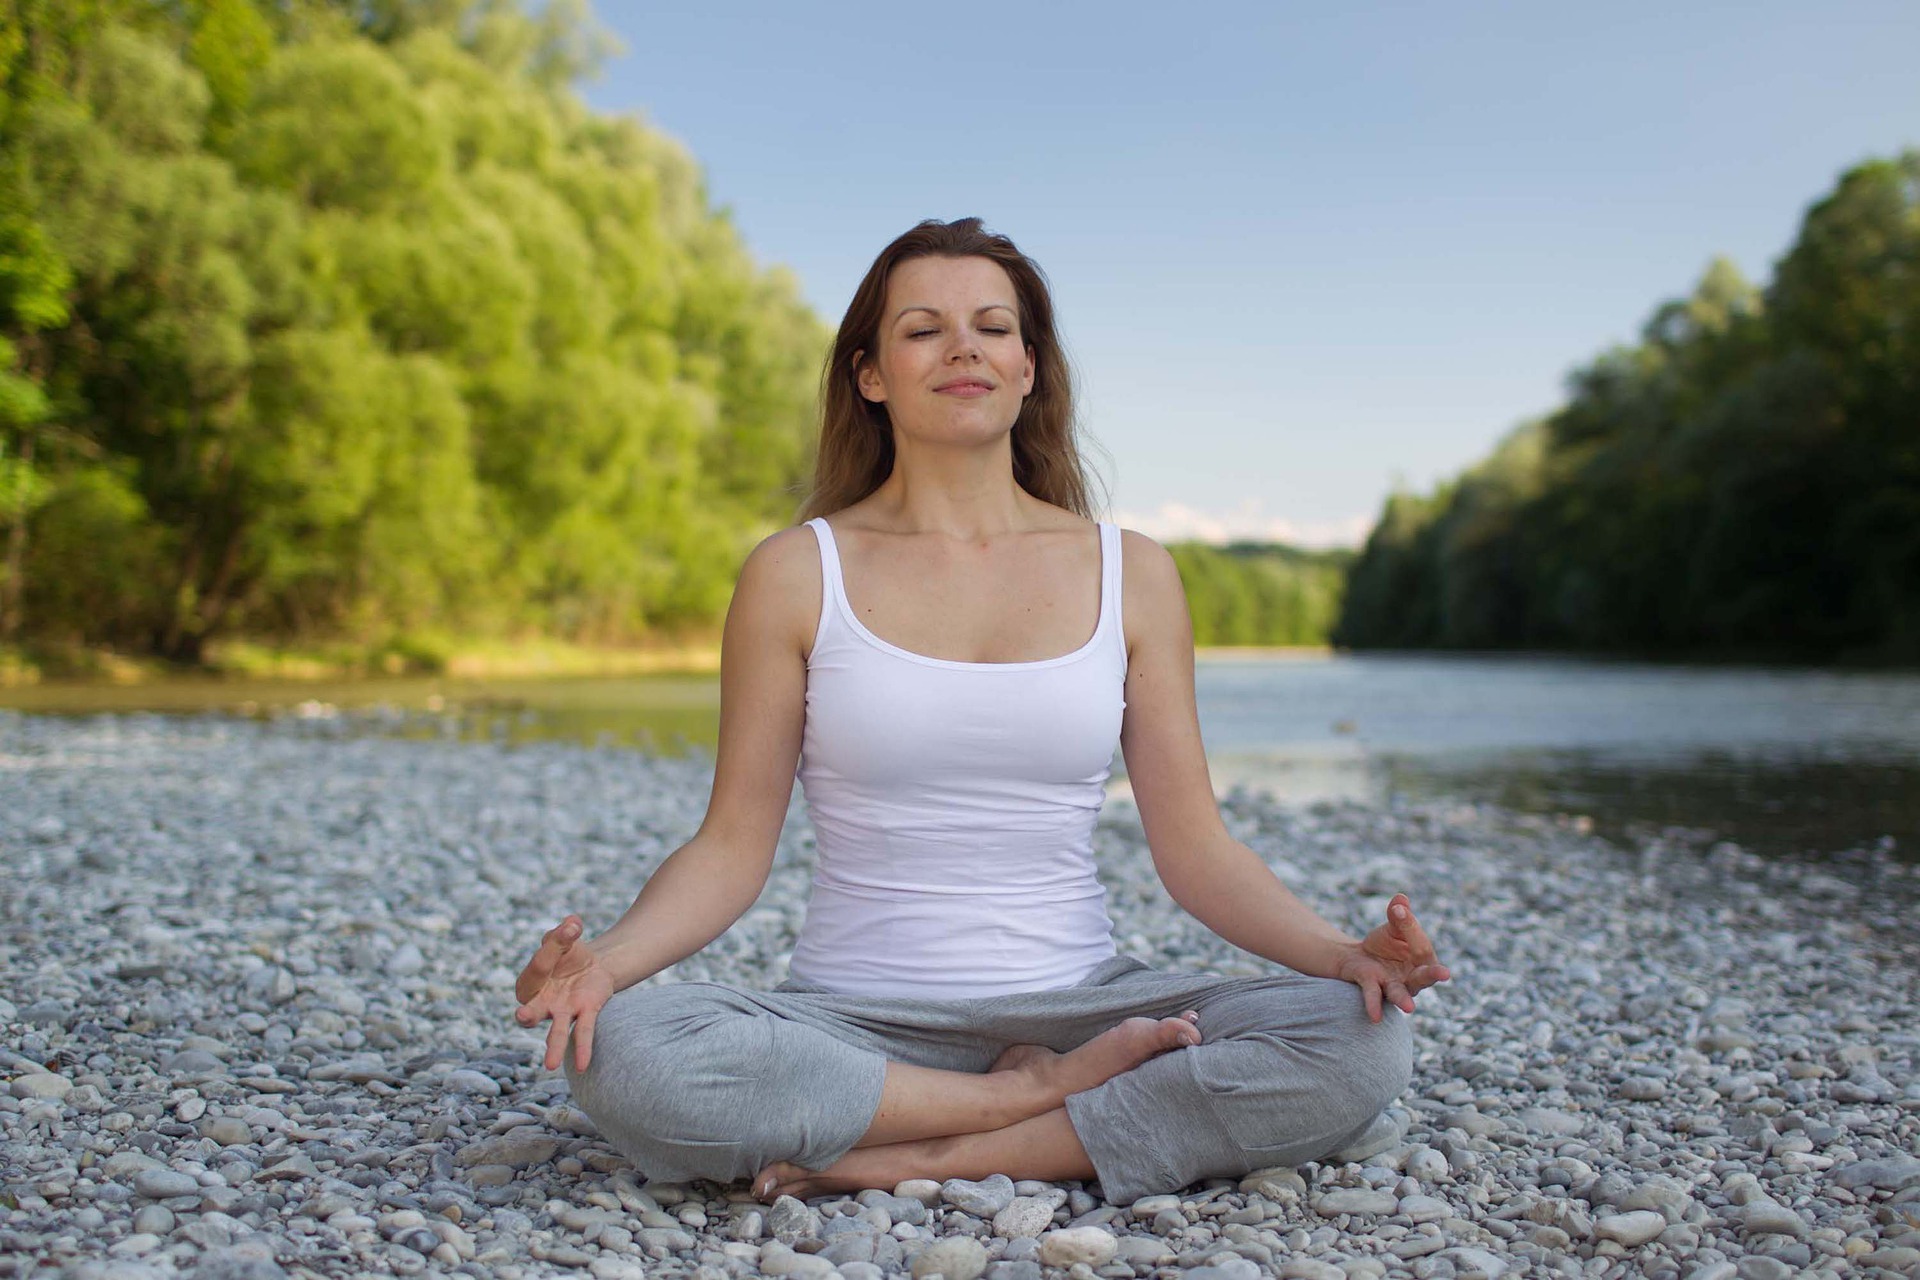 Frau bei Meditation | Bildquelle: pixabay